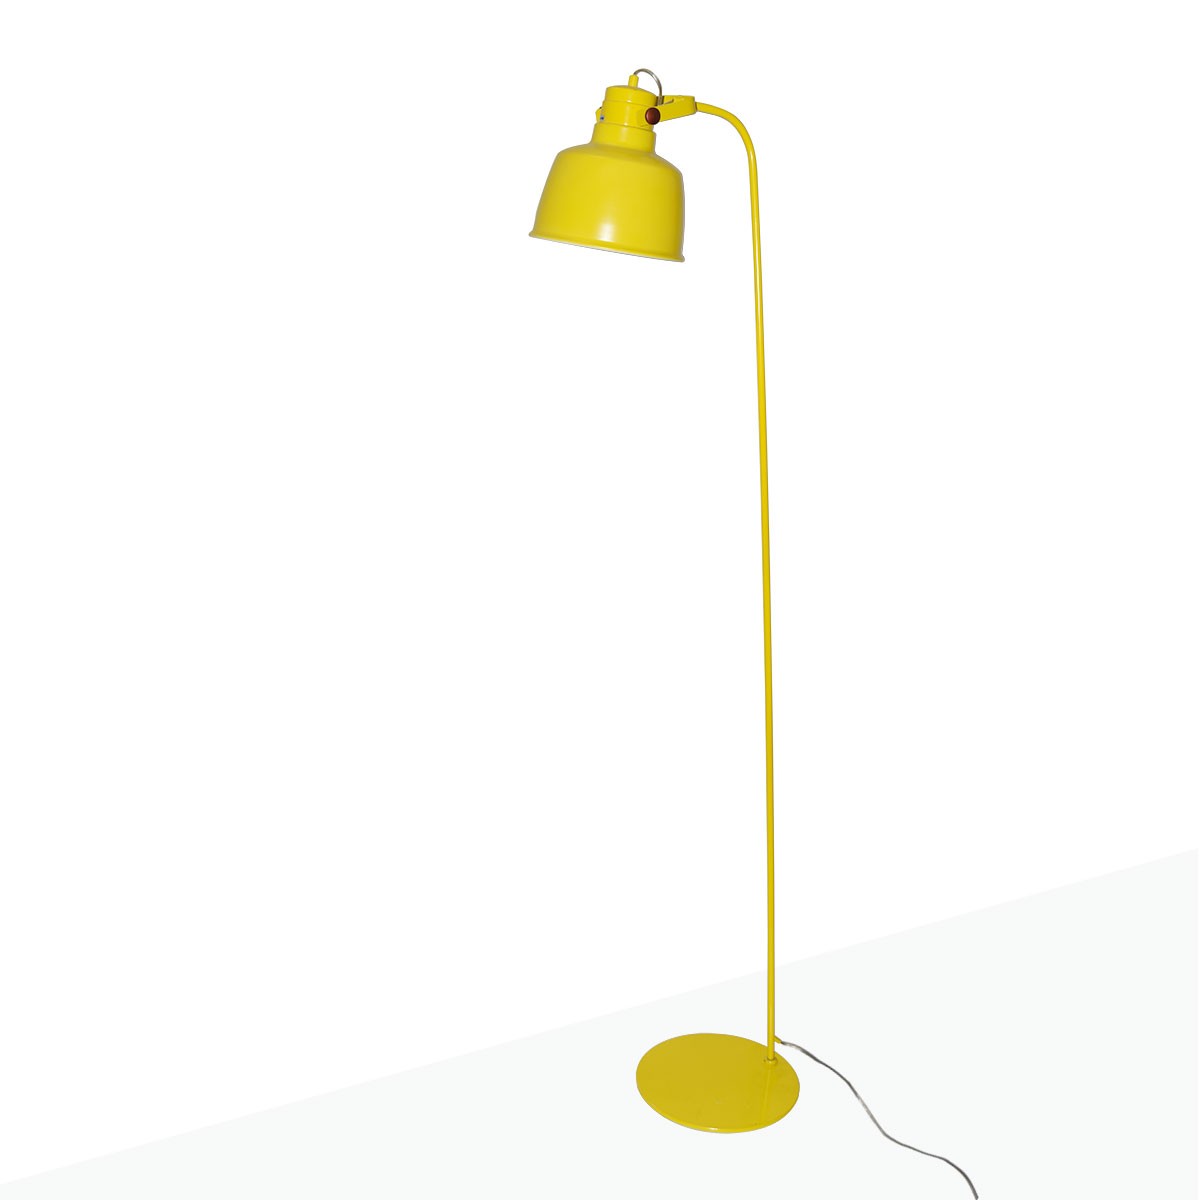 kukka lamp yellow color